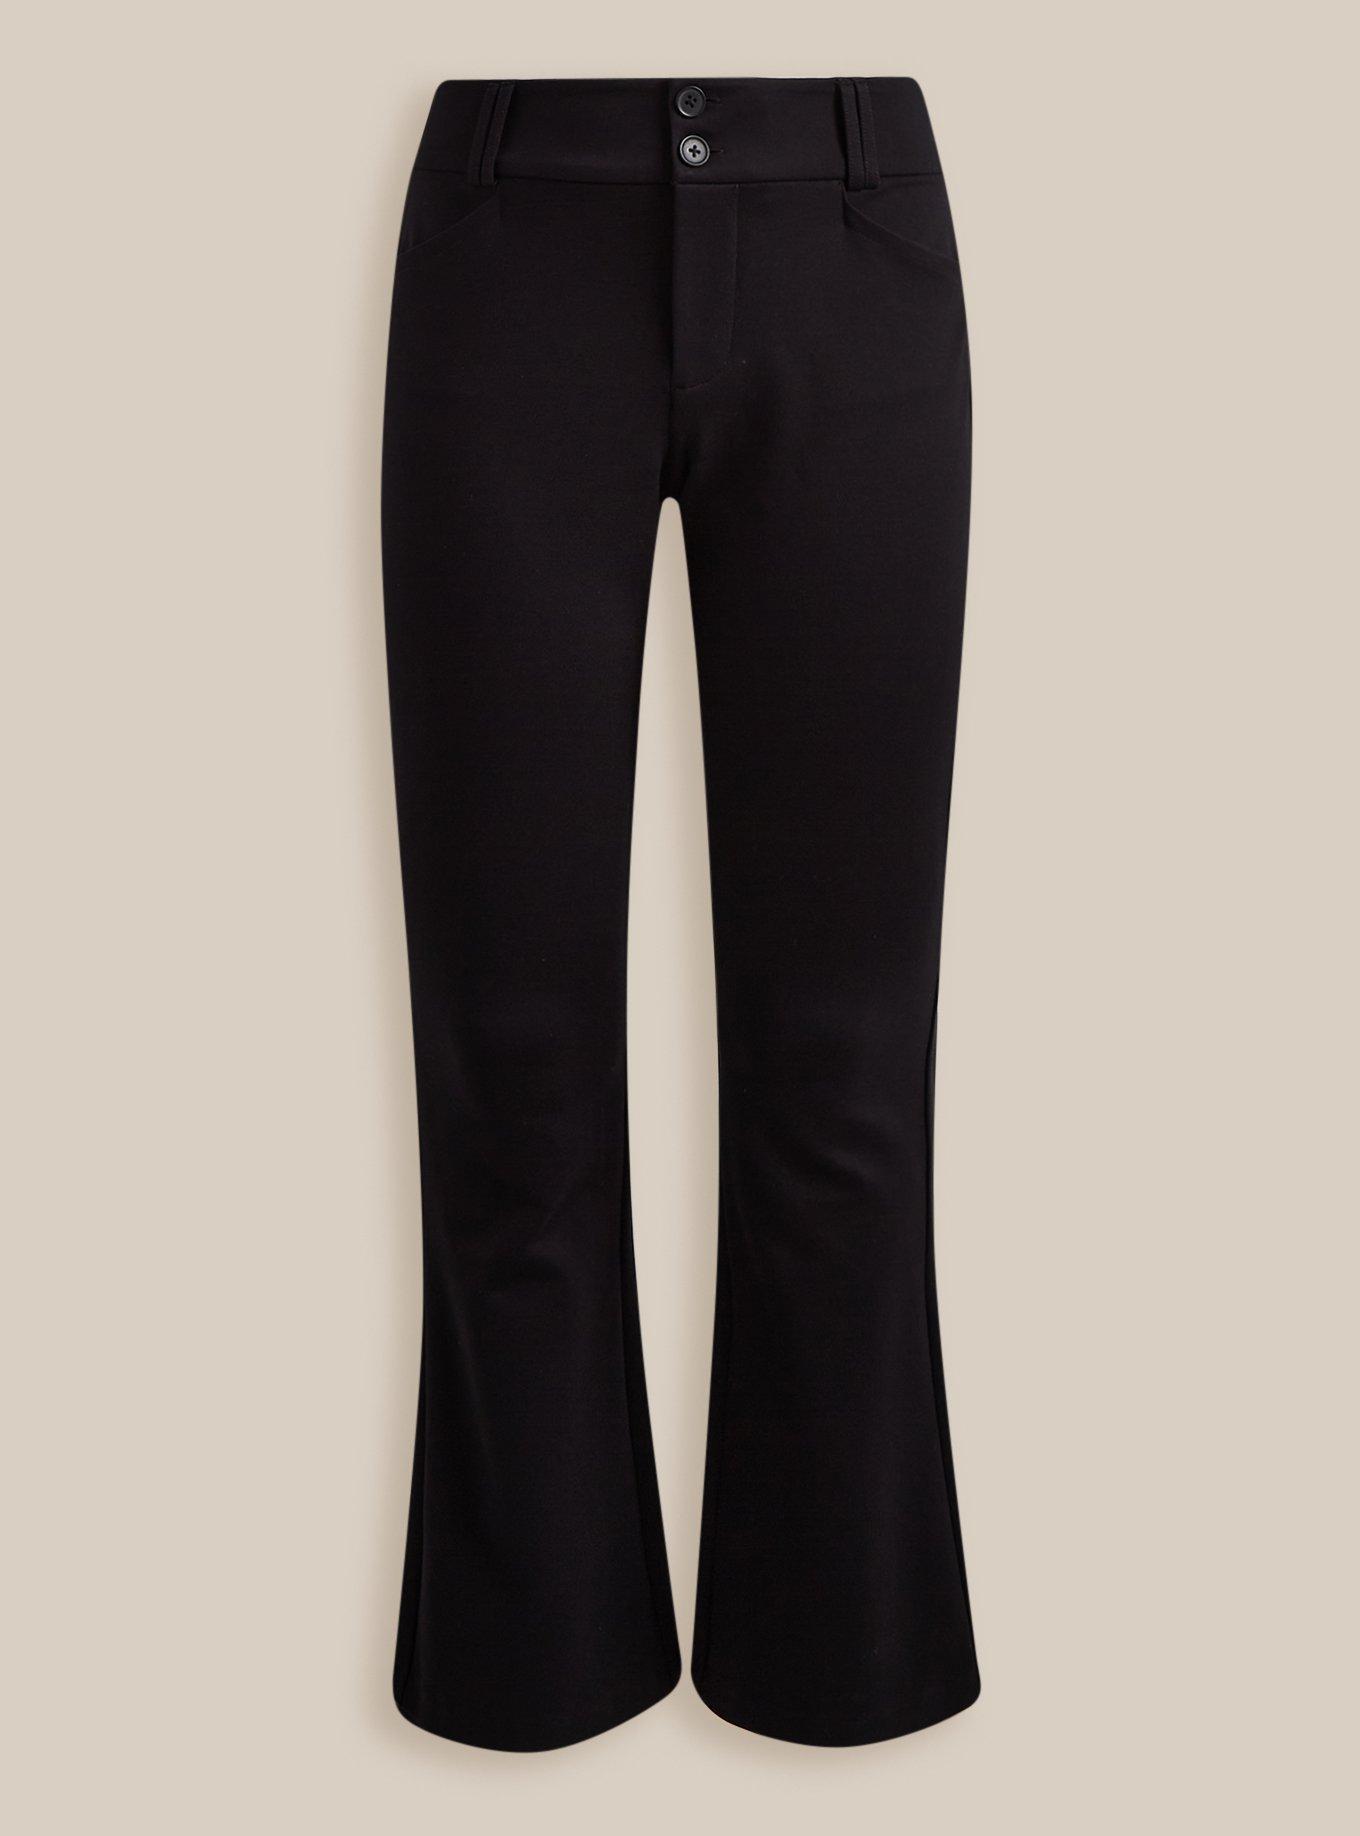 Plus Size - Trouser Boot Studio Double Knit High Rise Pant - Torrid